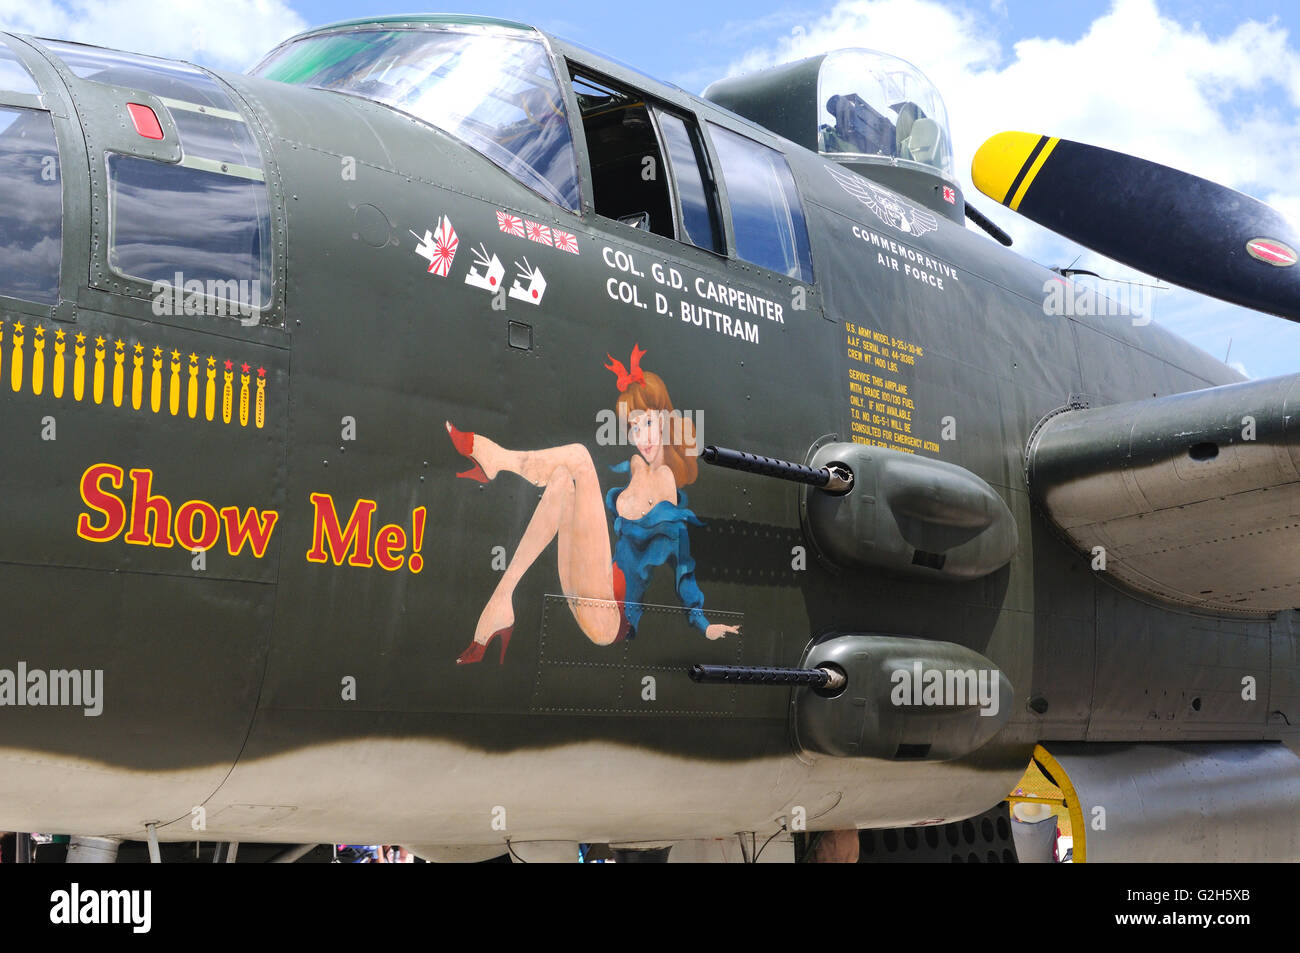 A World War II era B-25 light bomber with nose art displayed at an airshow Stock Photo